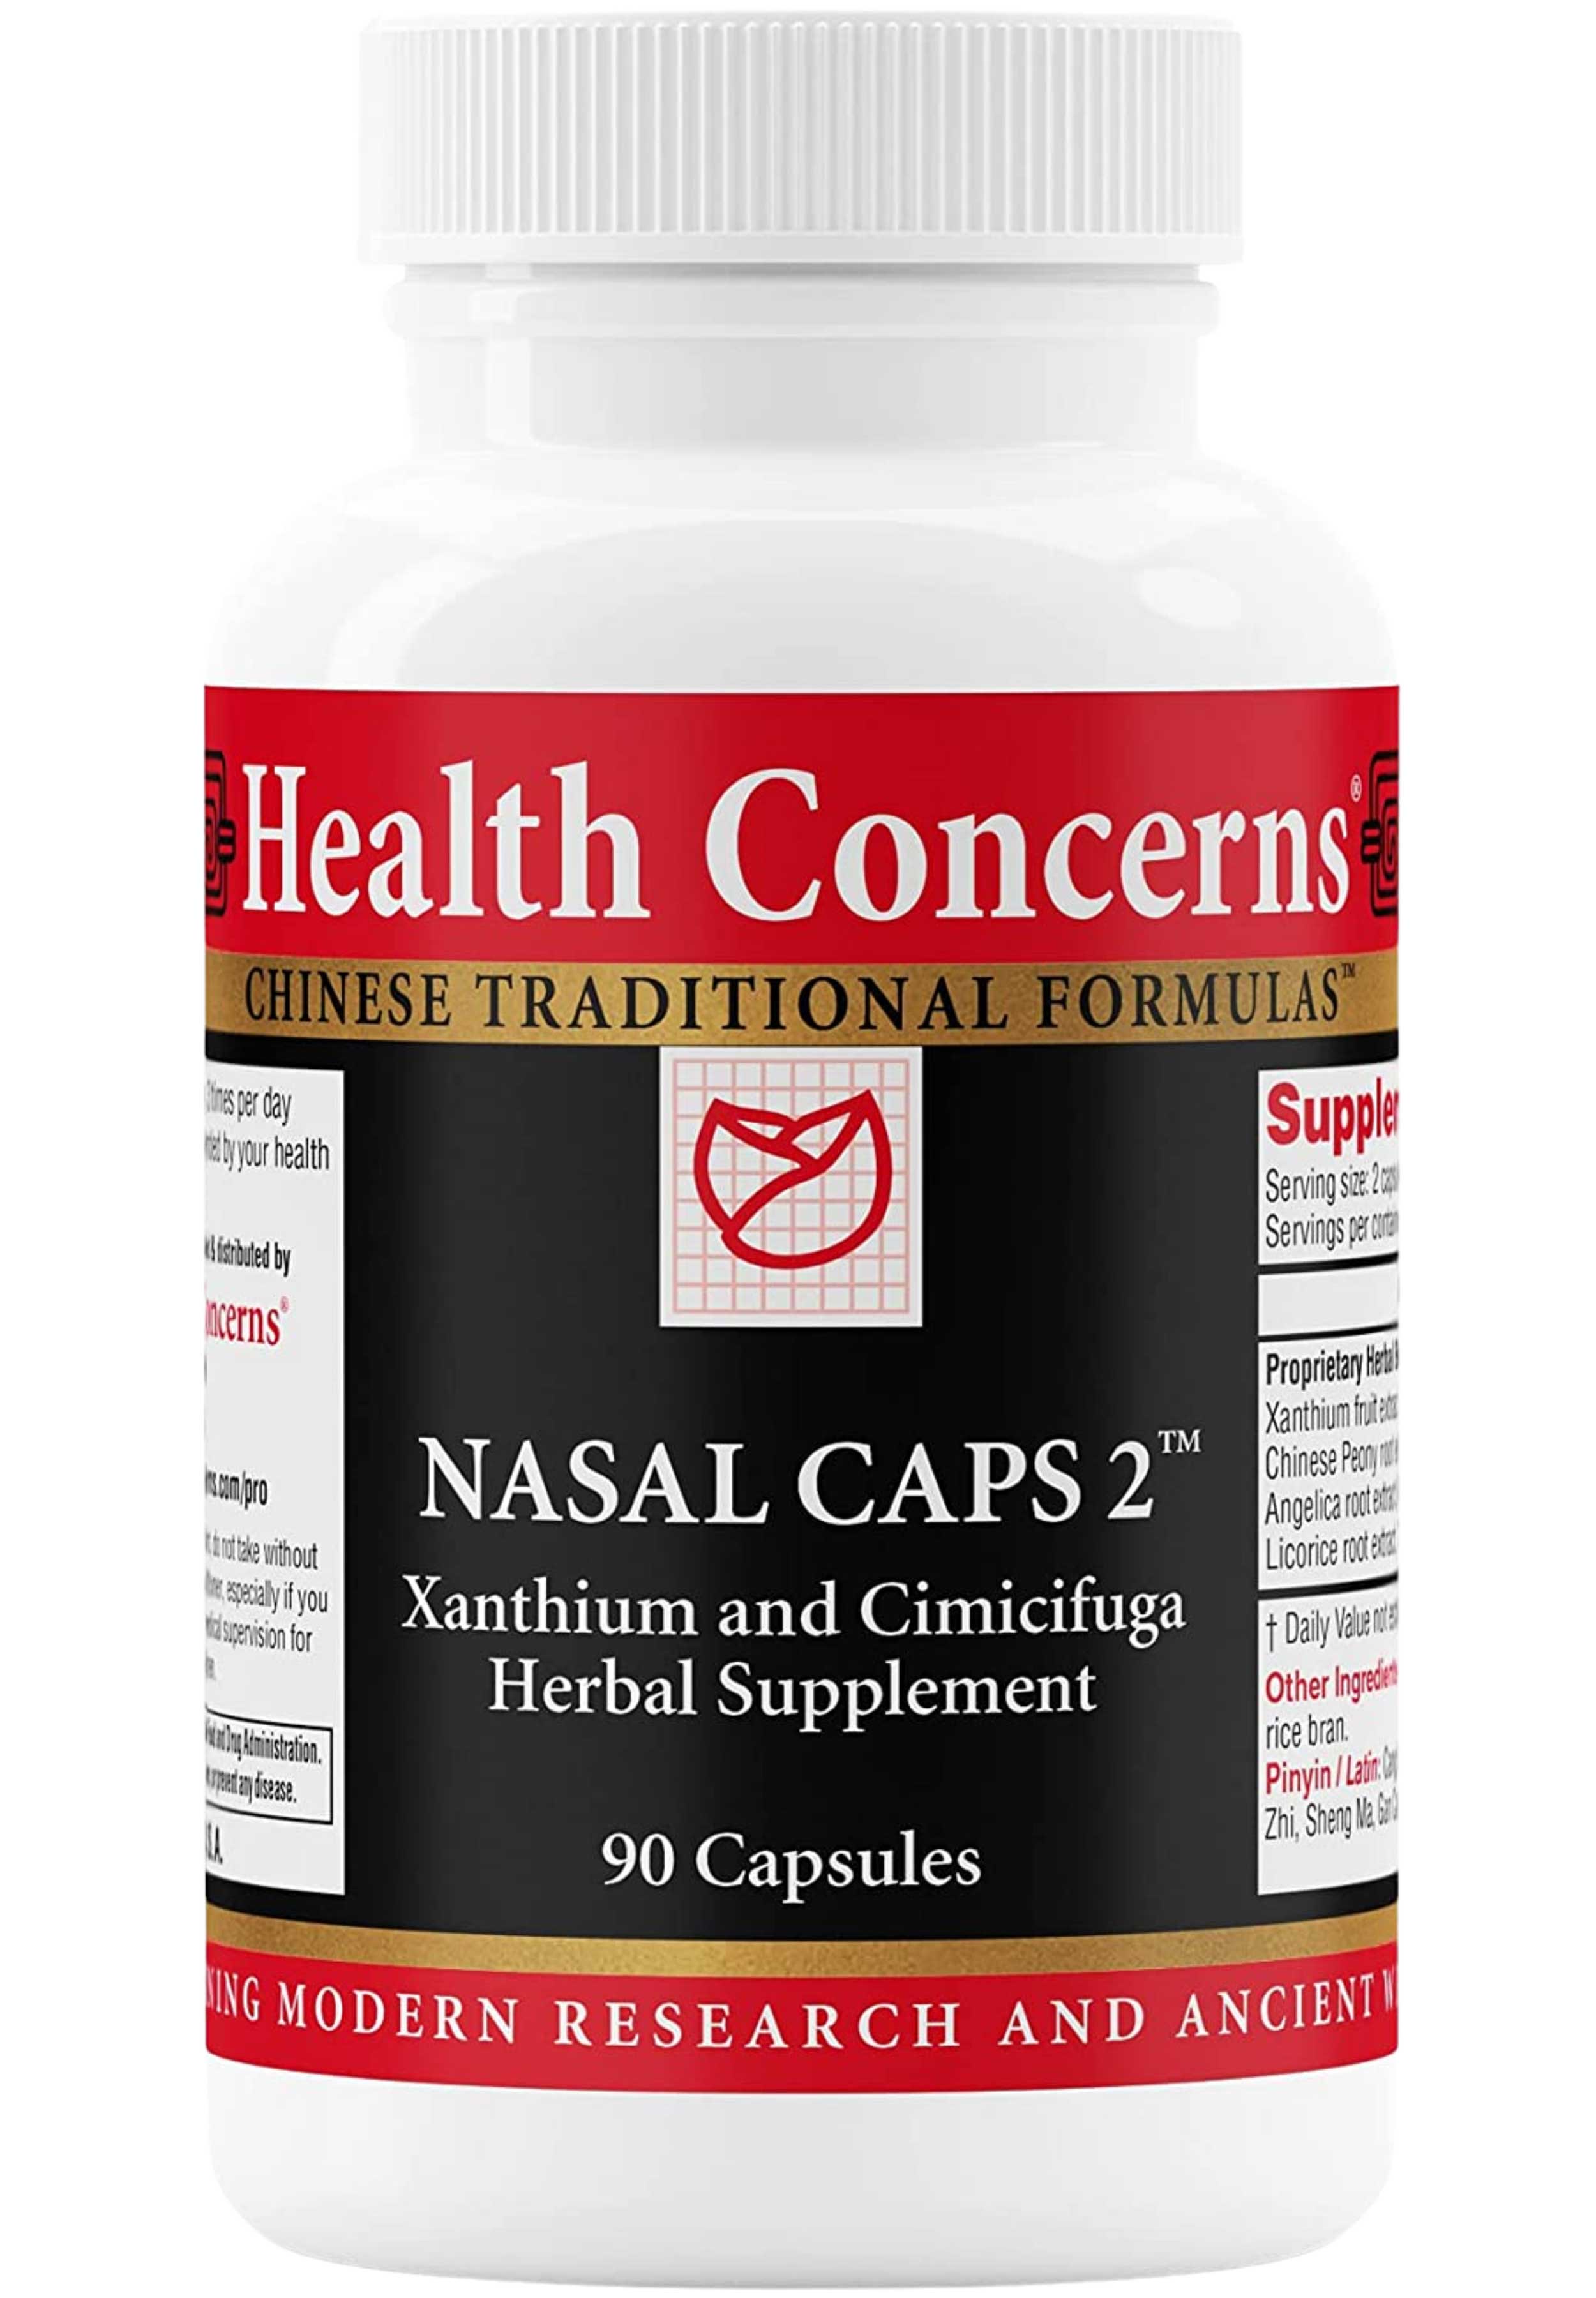 Health Concerns Nasal Caps 2